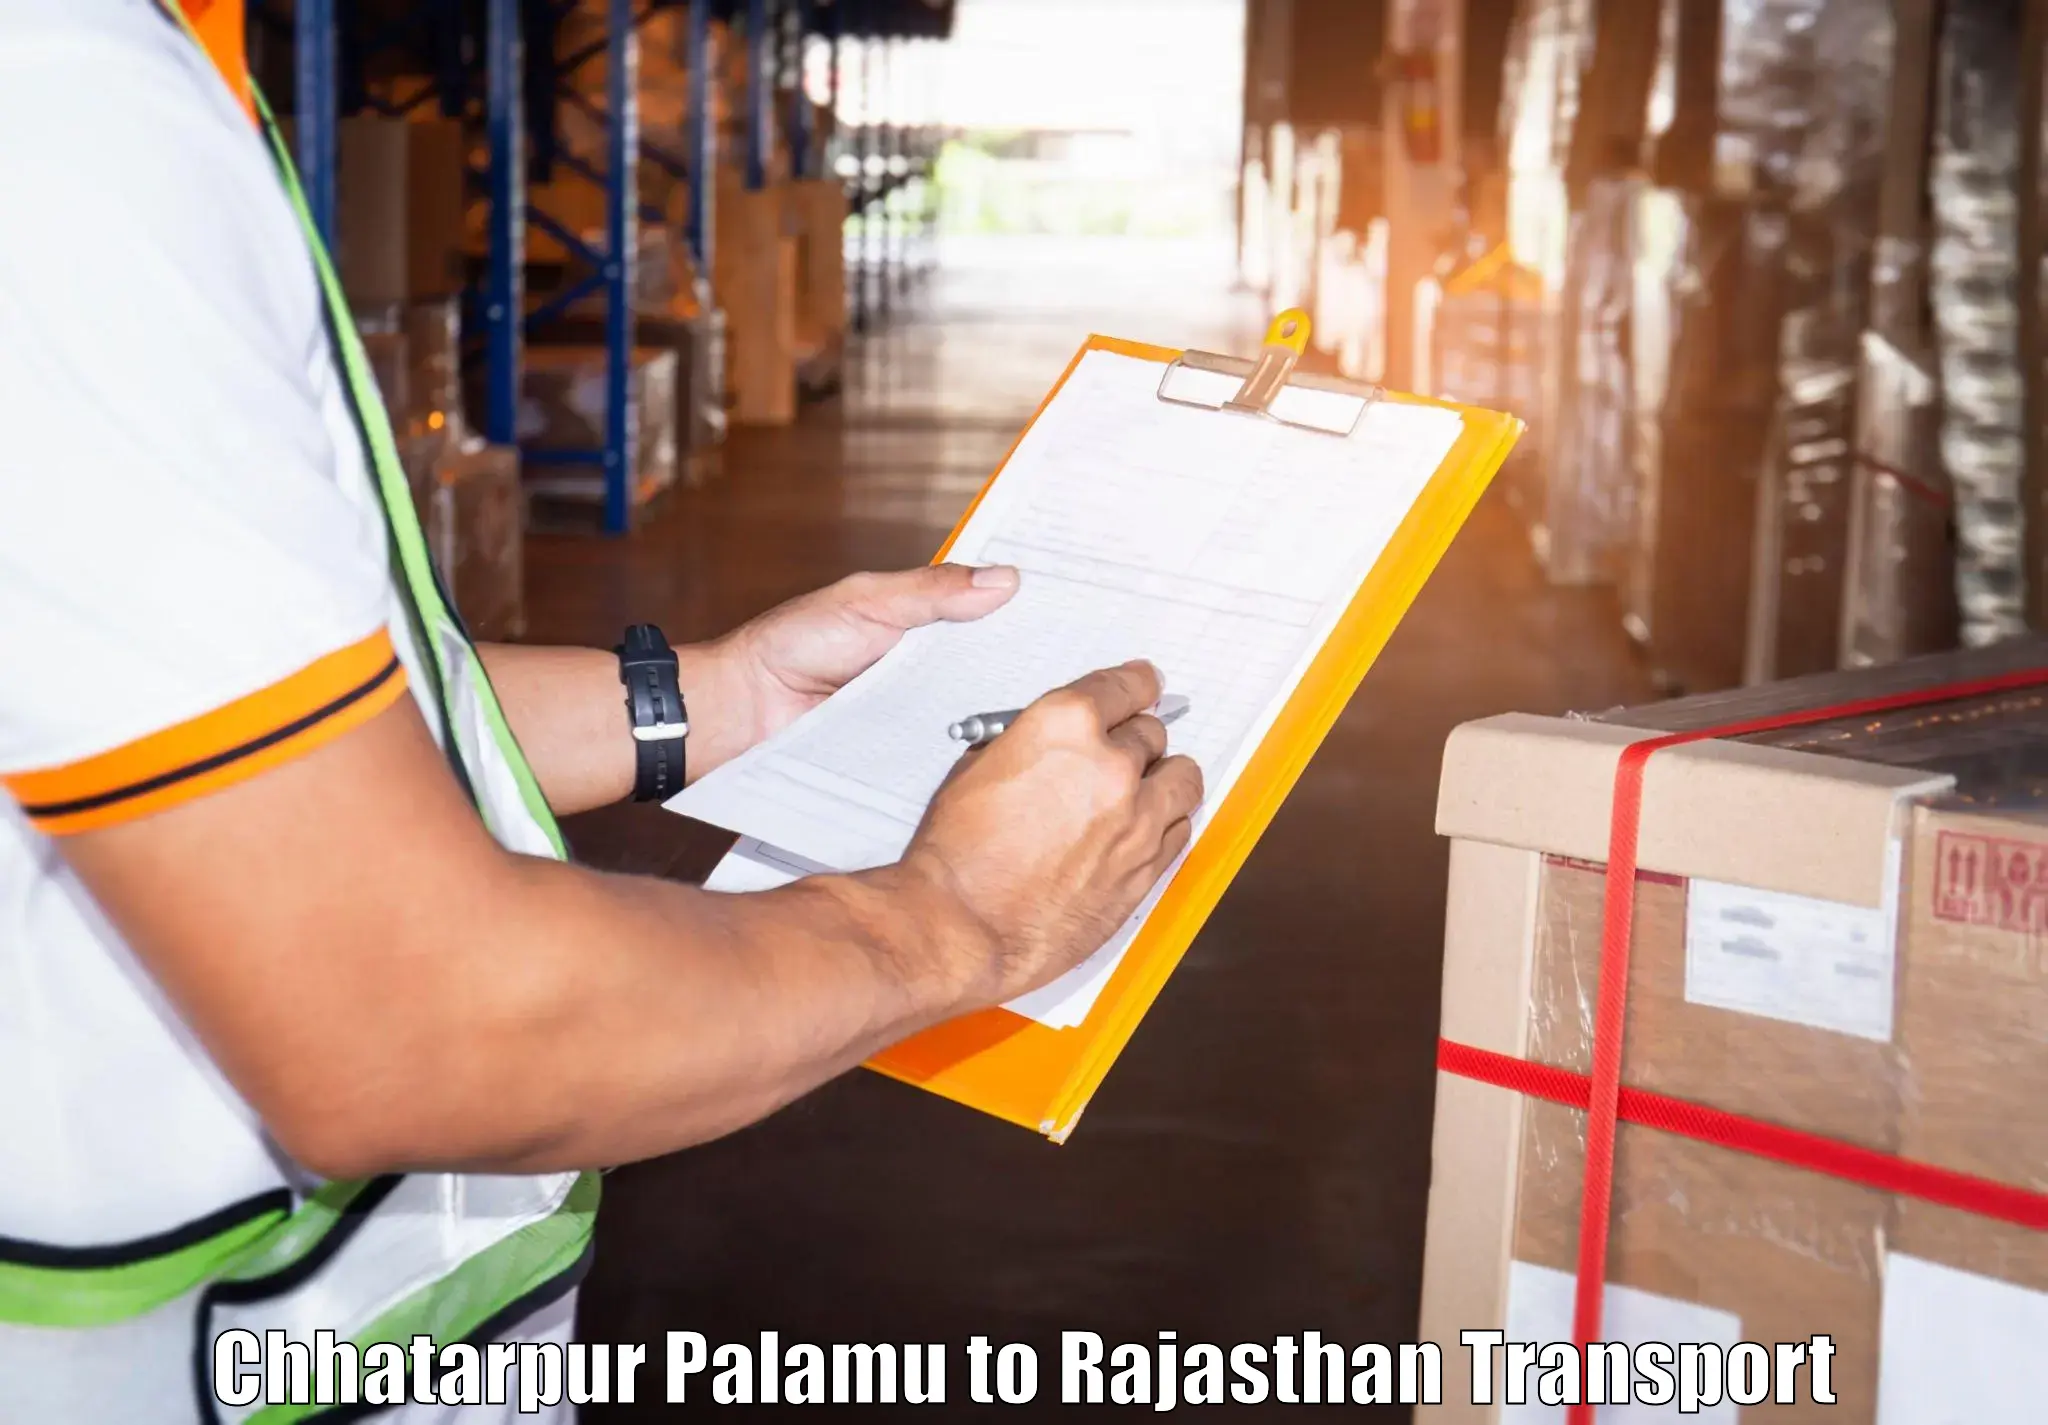 Two wheeler parcel service Chhatarpur Palamu to Chirawa